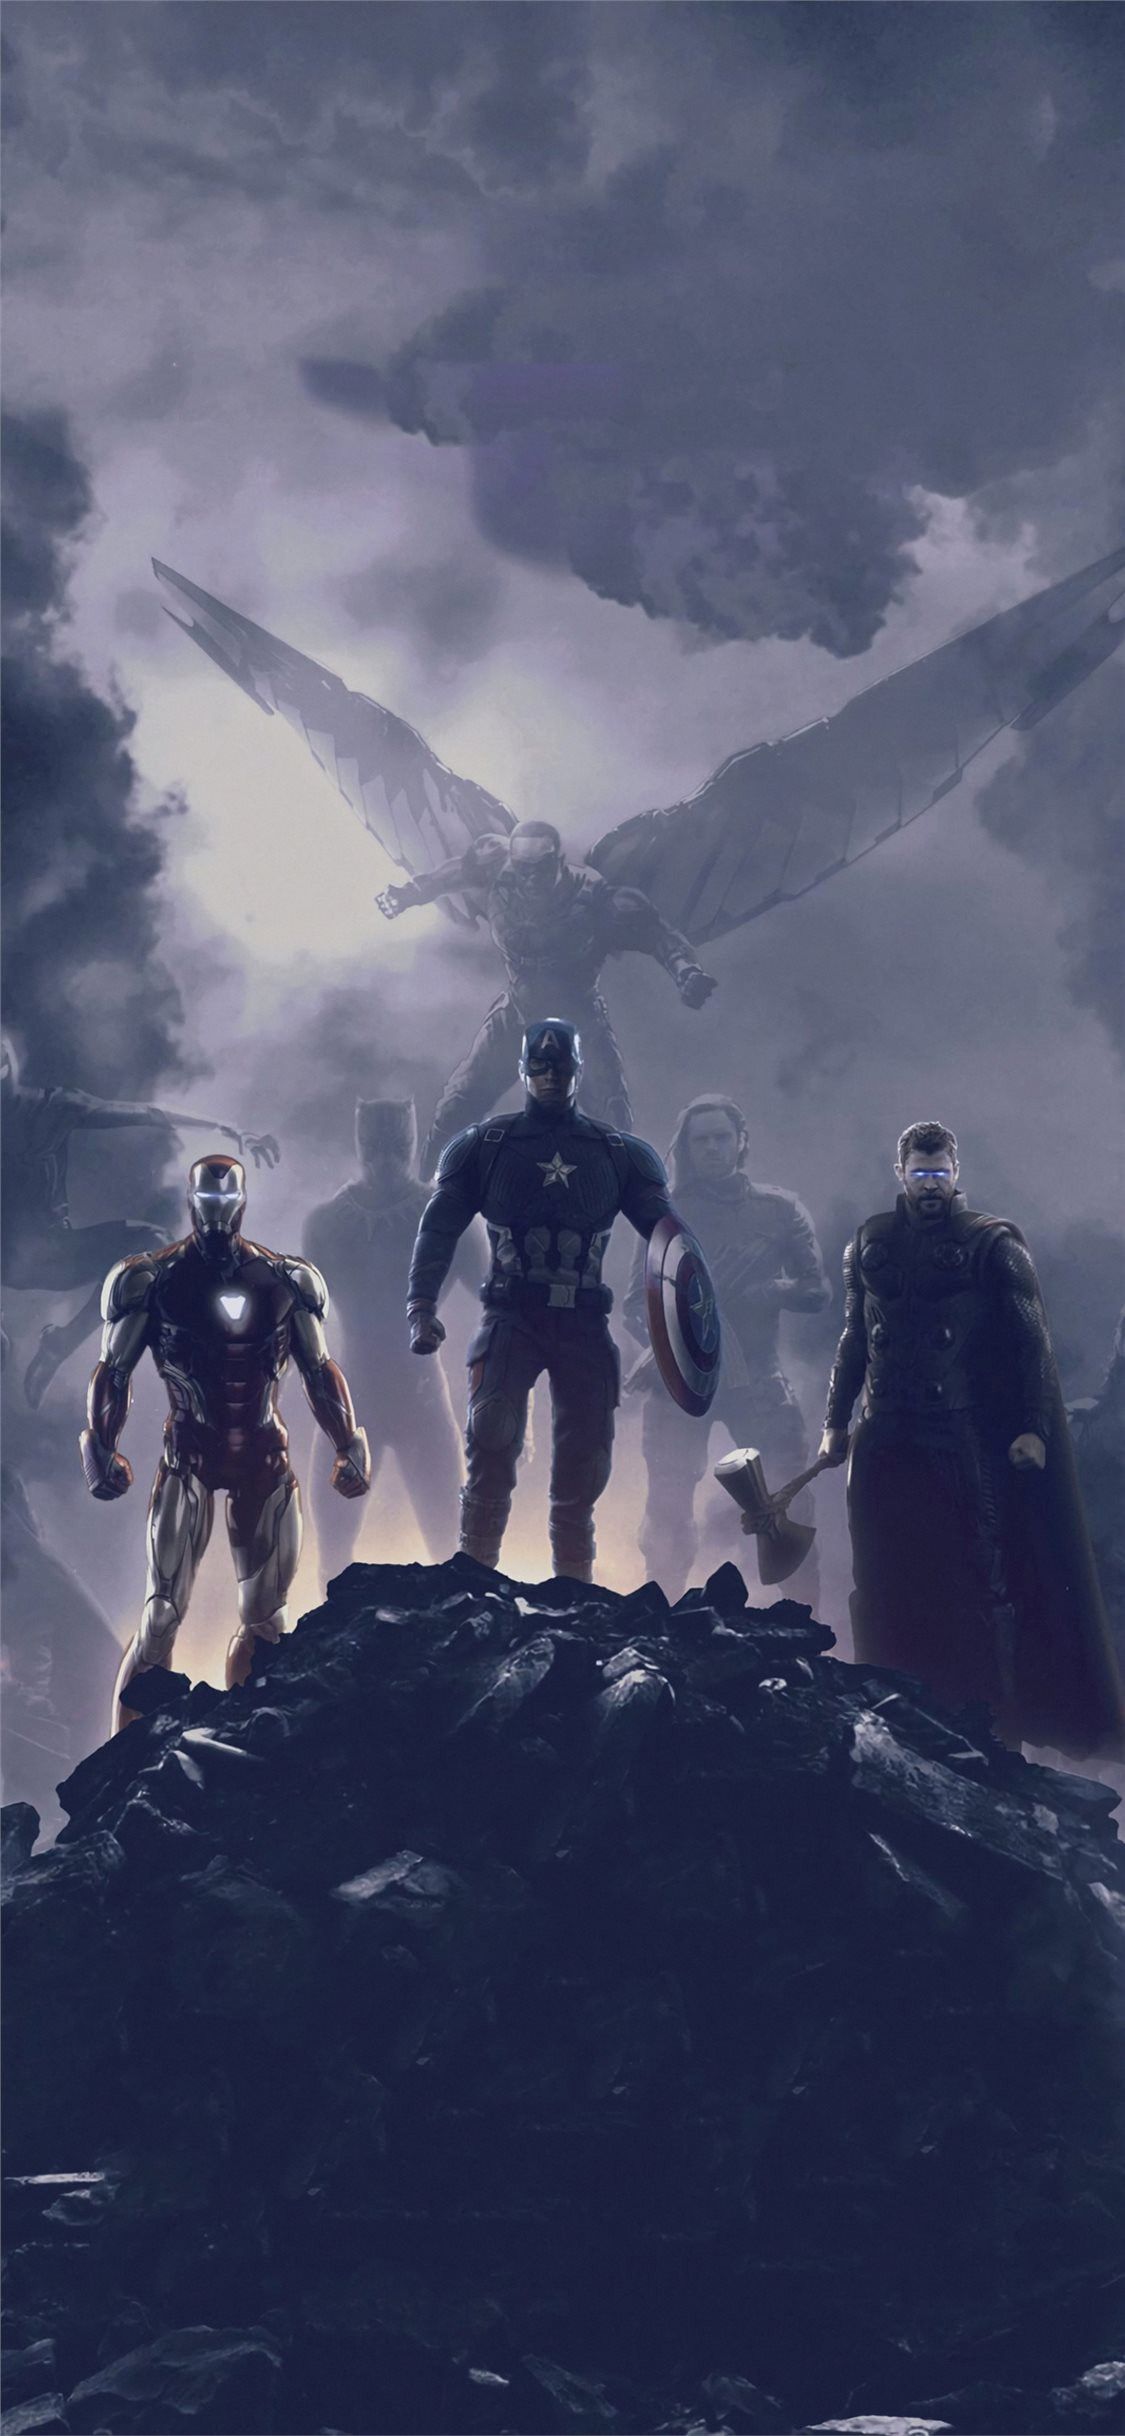 Awesome Avengers Endgame Trinity 2019 iPhone X Wallpaper Free Download. Avengers wallpaper, Marvel superheroes, Marvel artwork